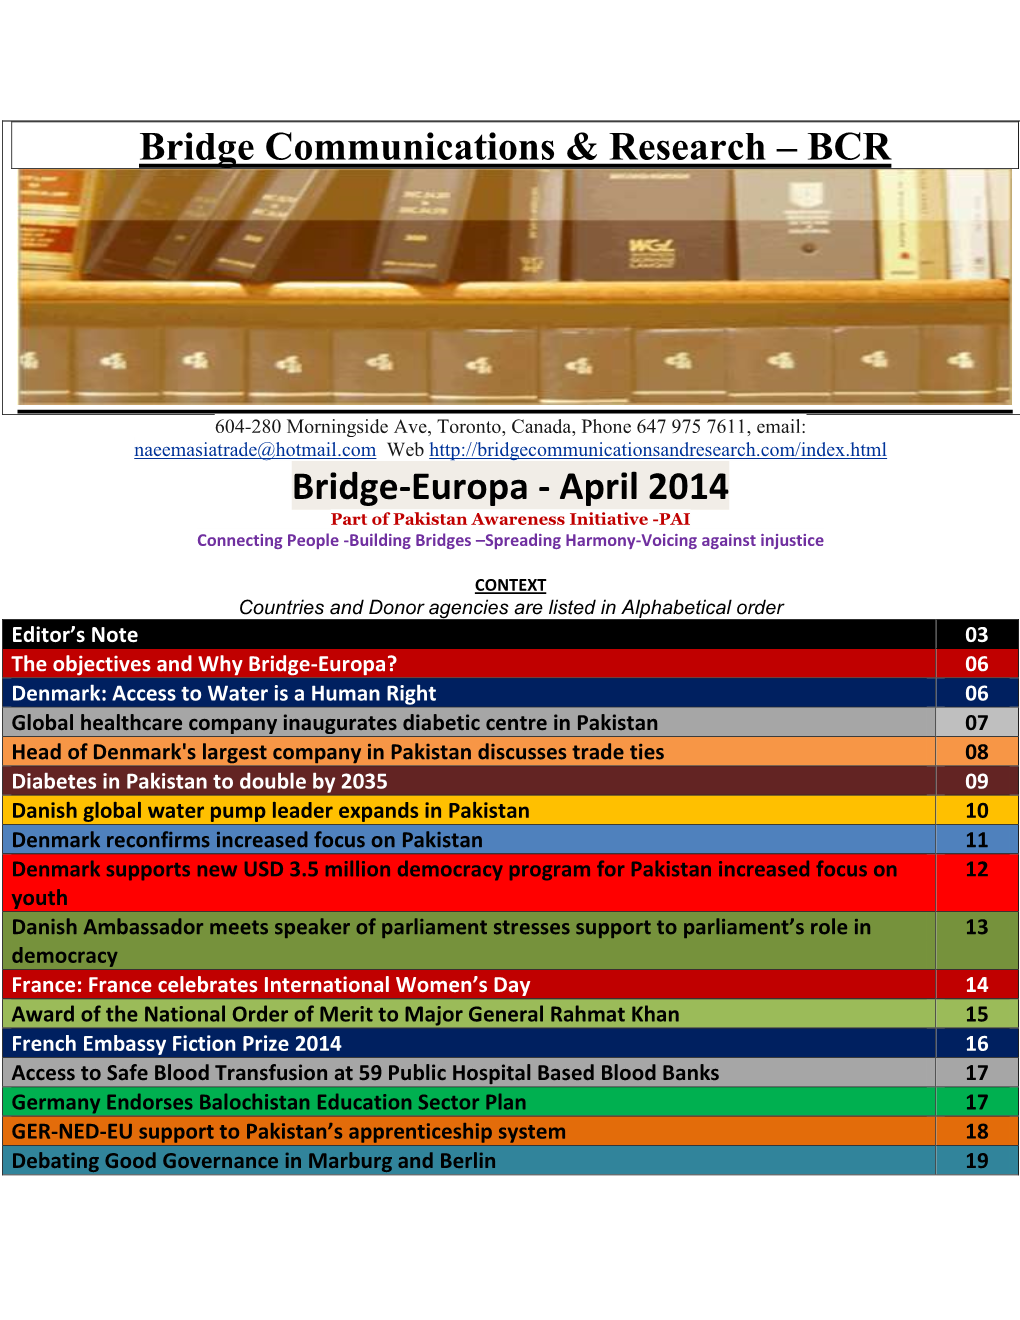 BCR Bridge-Europa